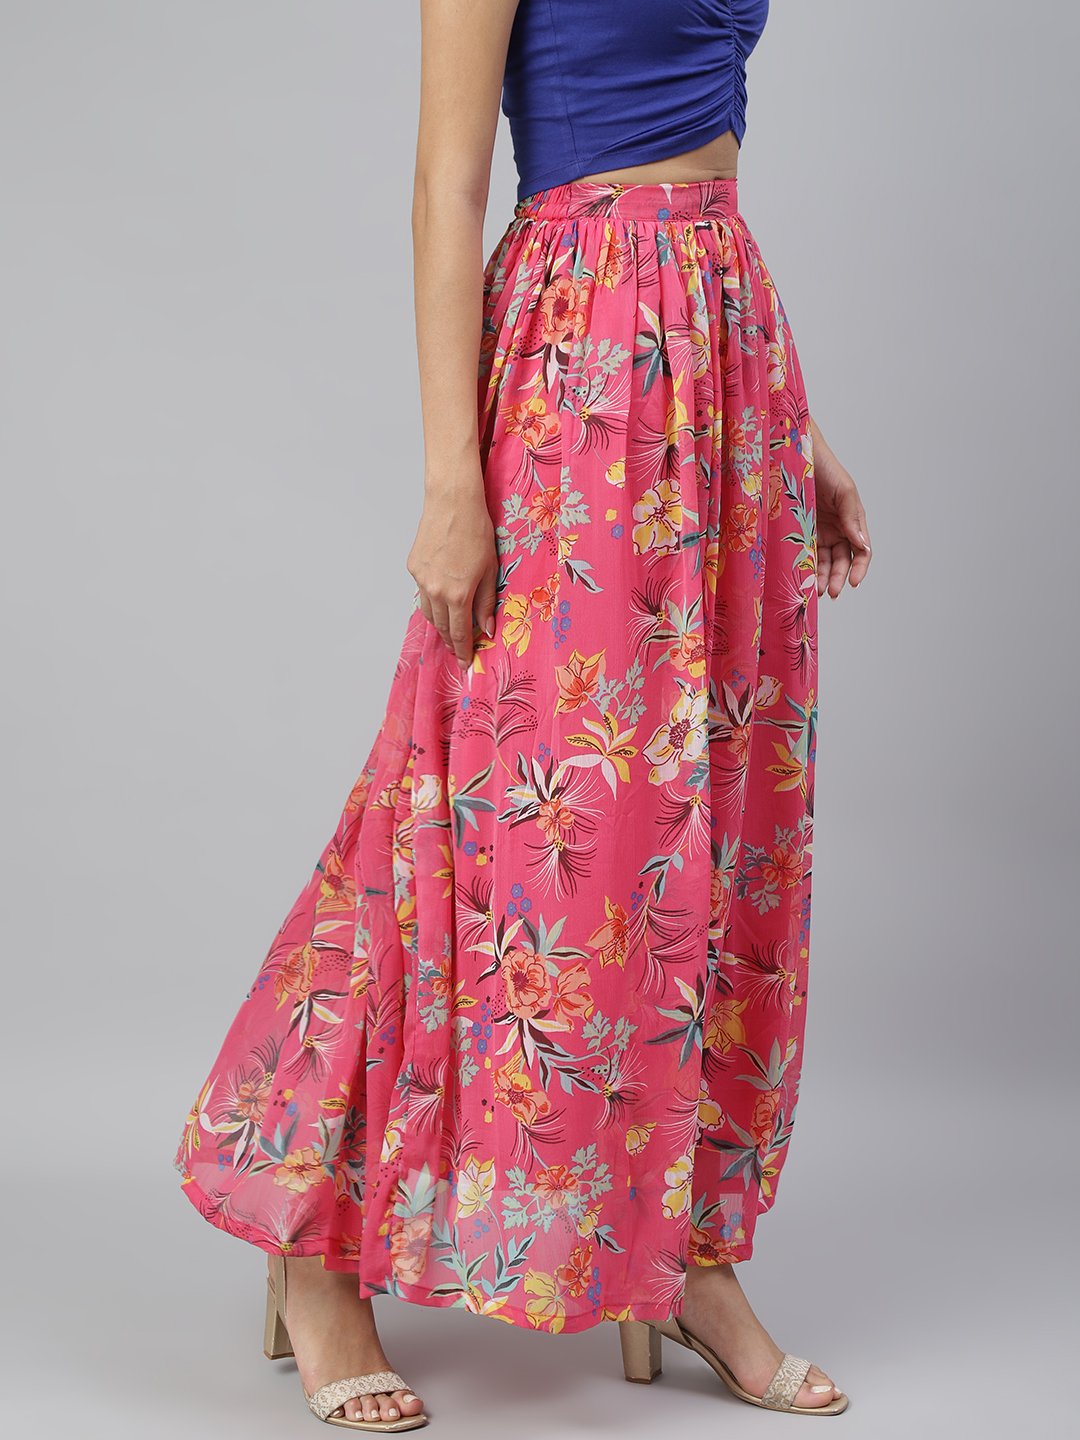 SCORPIUS Pink floral Long skirt